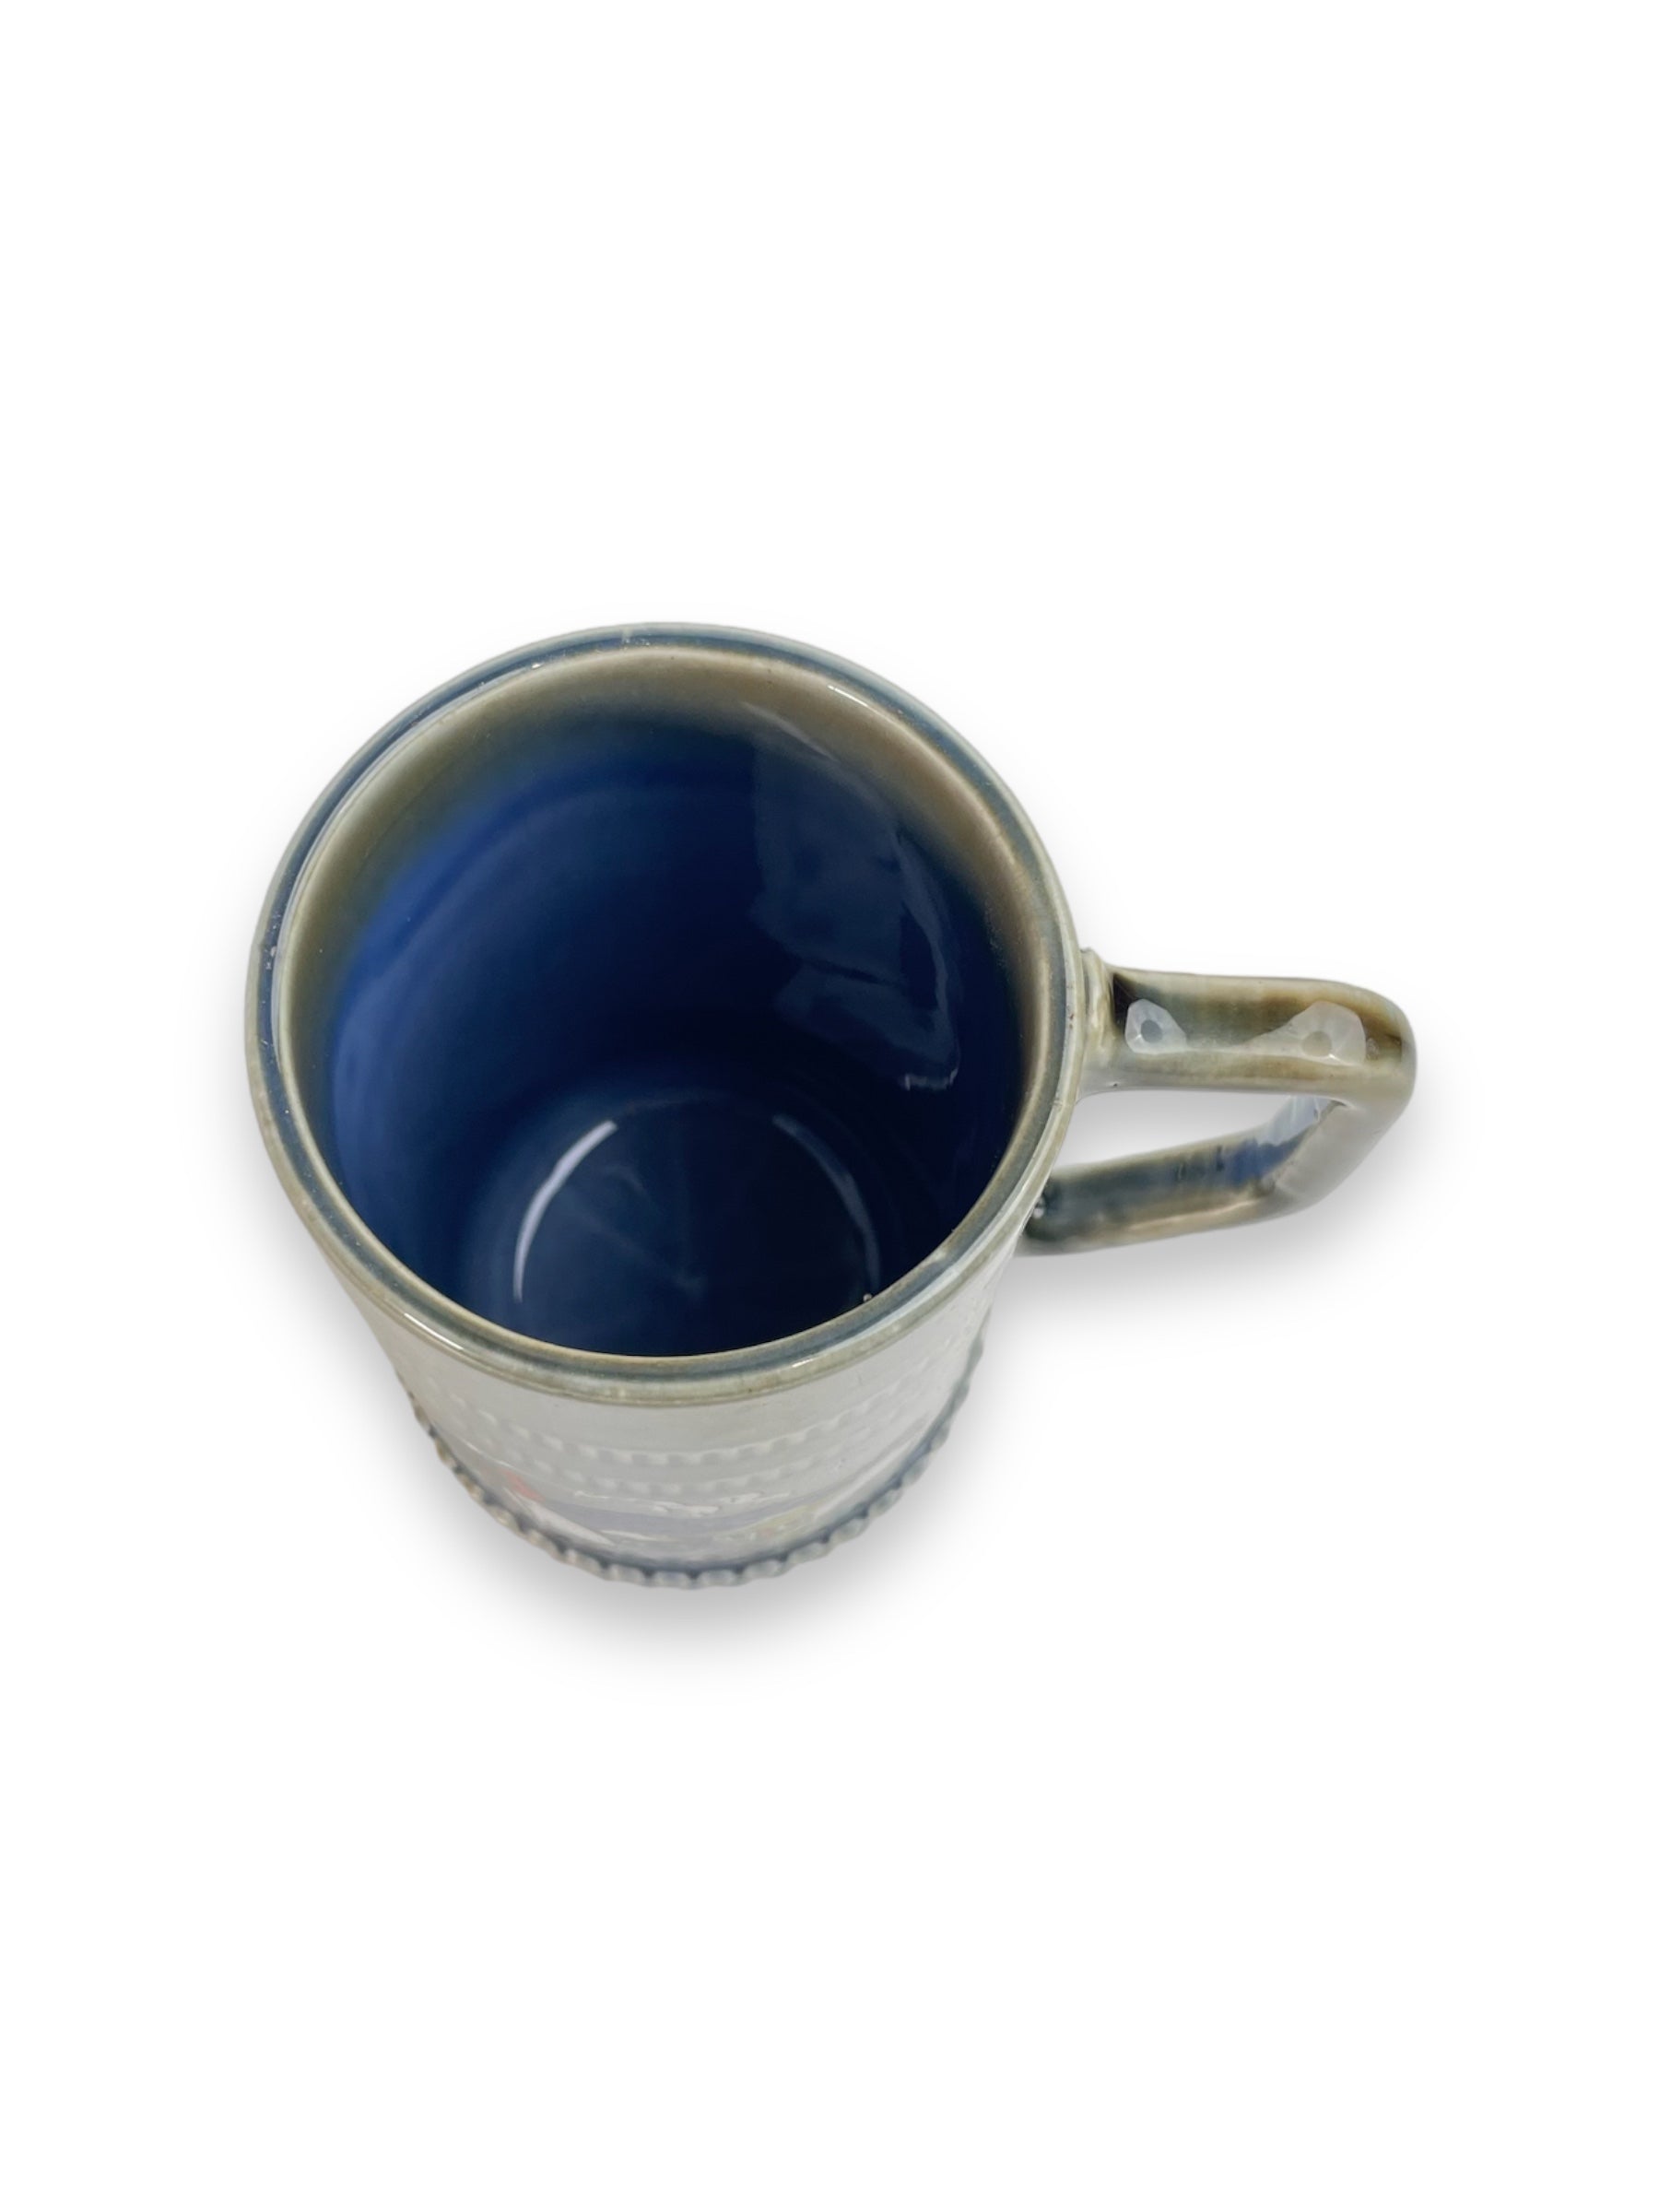 Pichet-mug en porcelaine irlandaise vintage